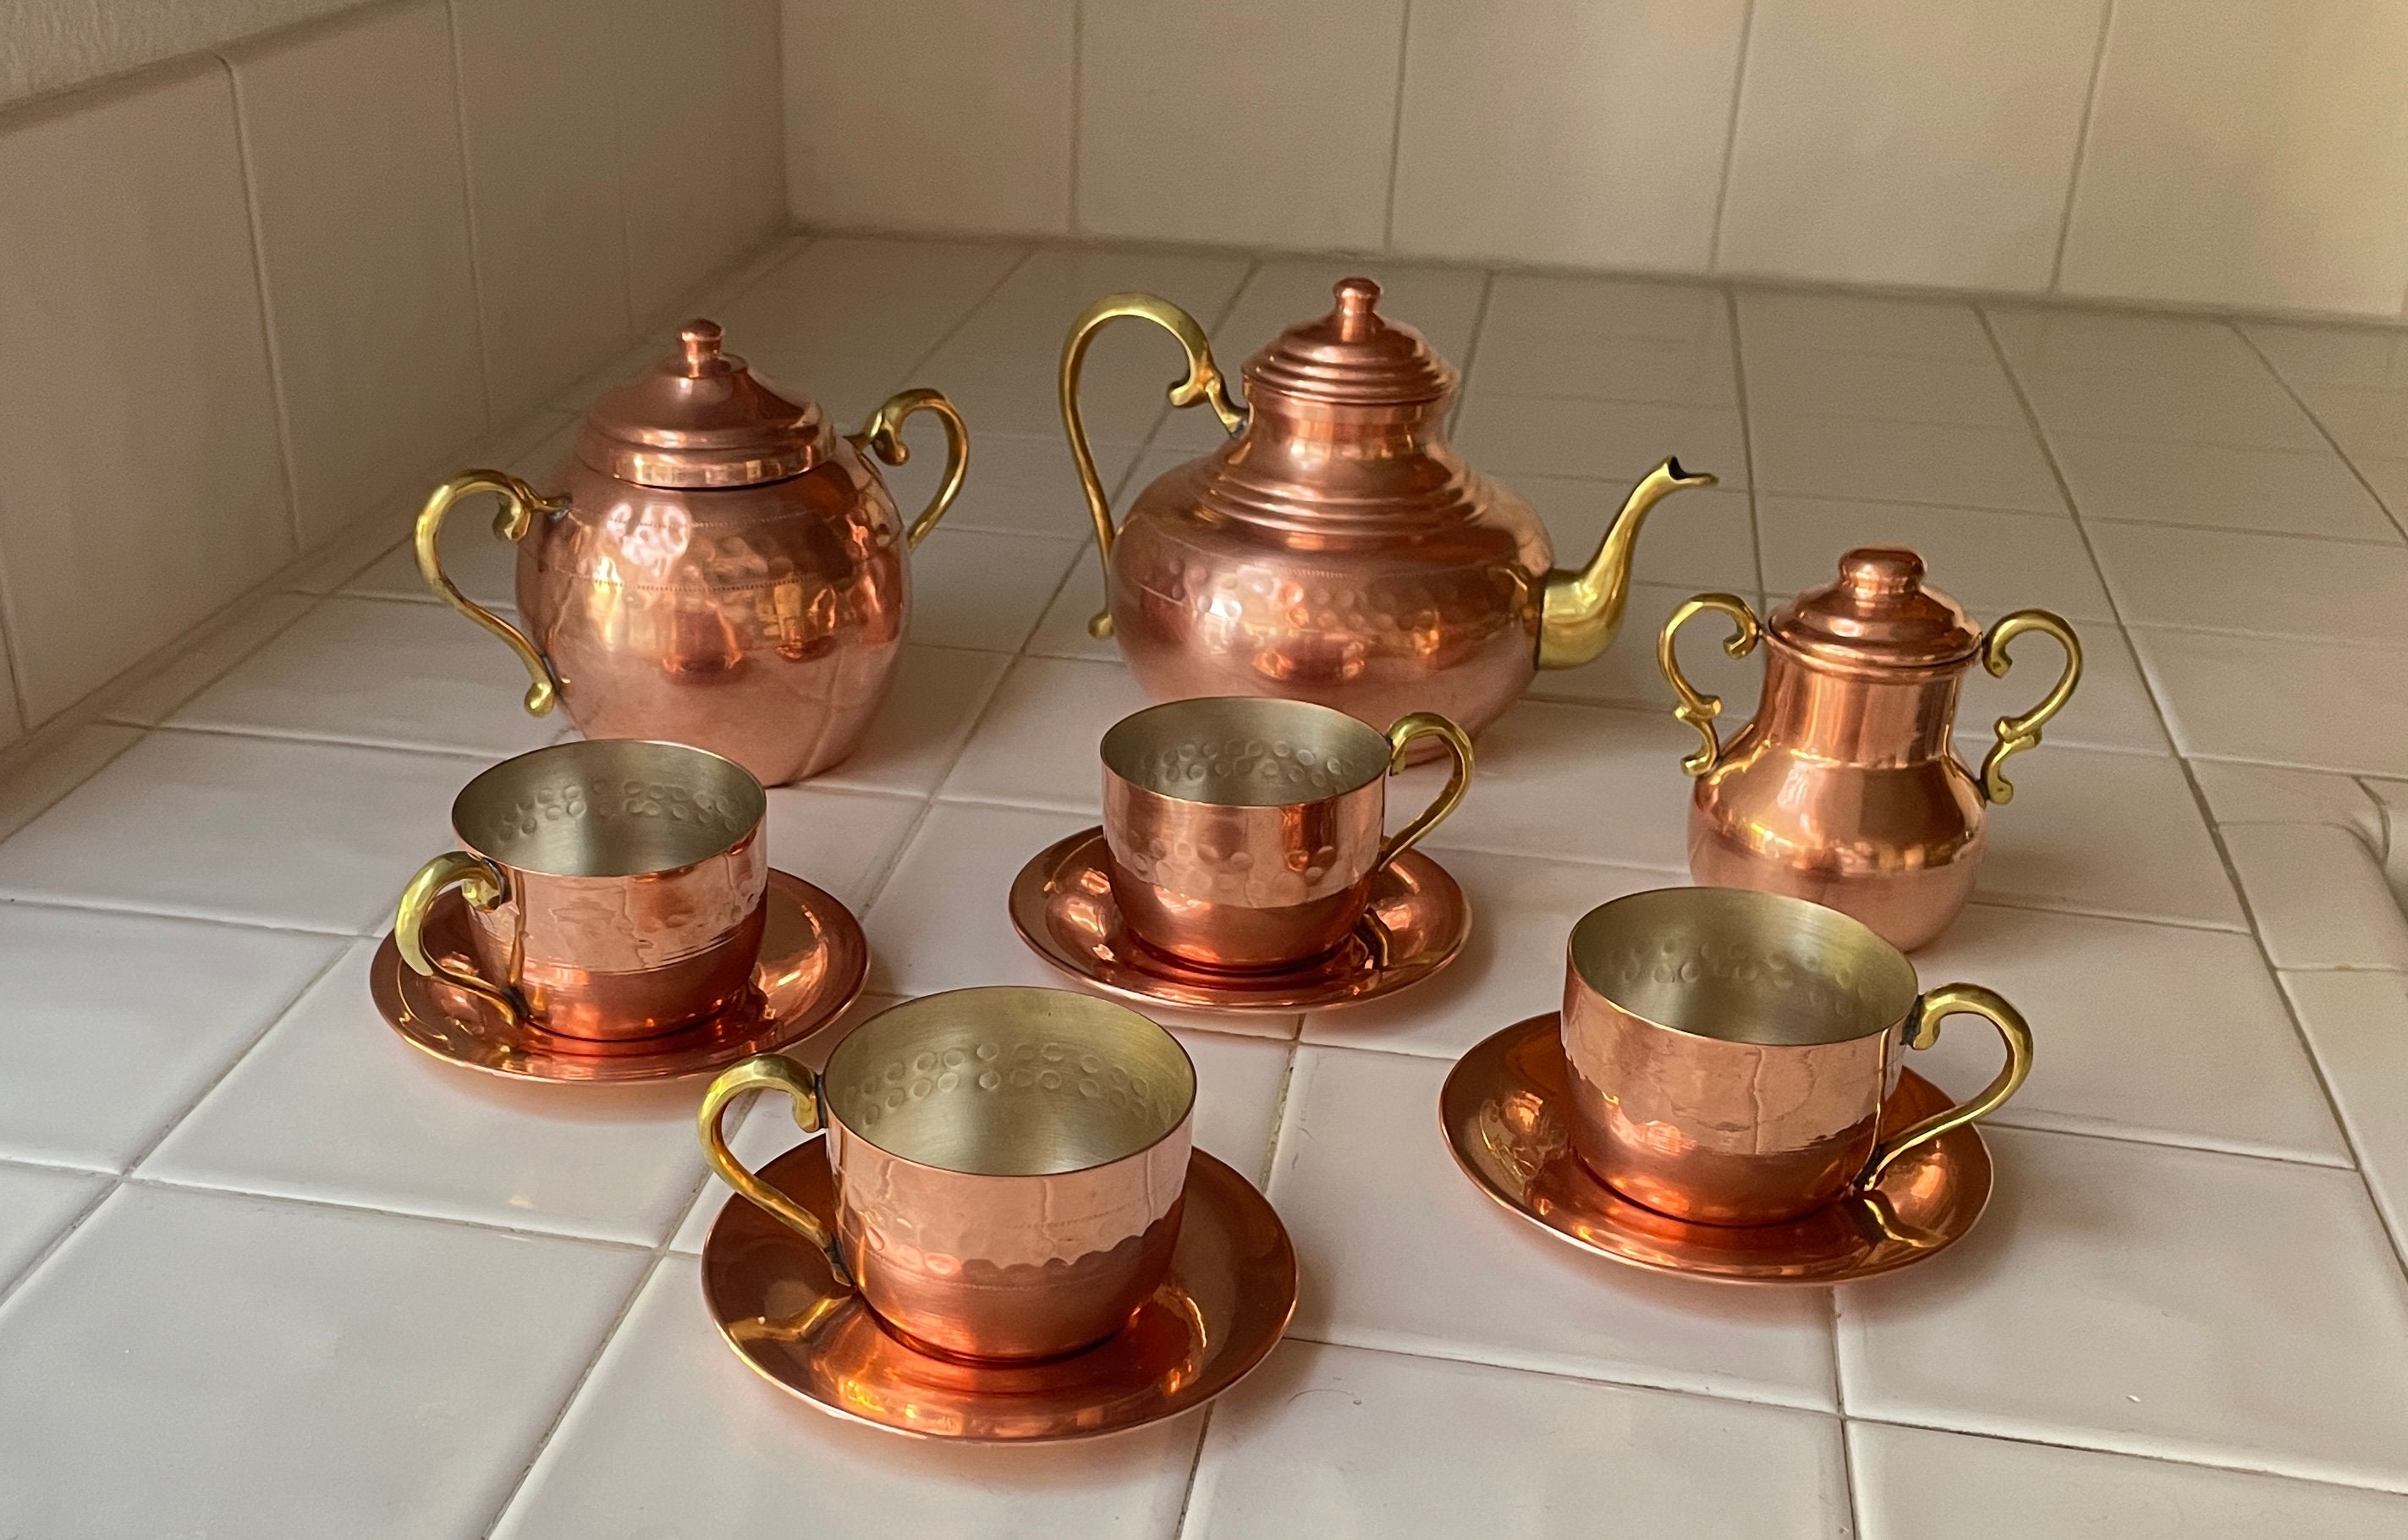 DEMMEX Heavy Gauge 1mm Thick Hammered Solid Copper Tea Pot Kettle Stovetop Teapot, Handmade (1.6-Quarts - Engraved)